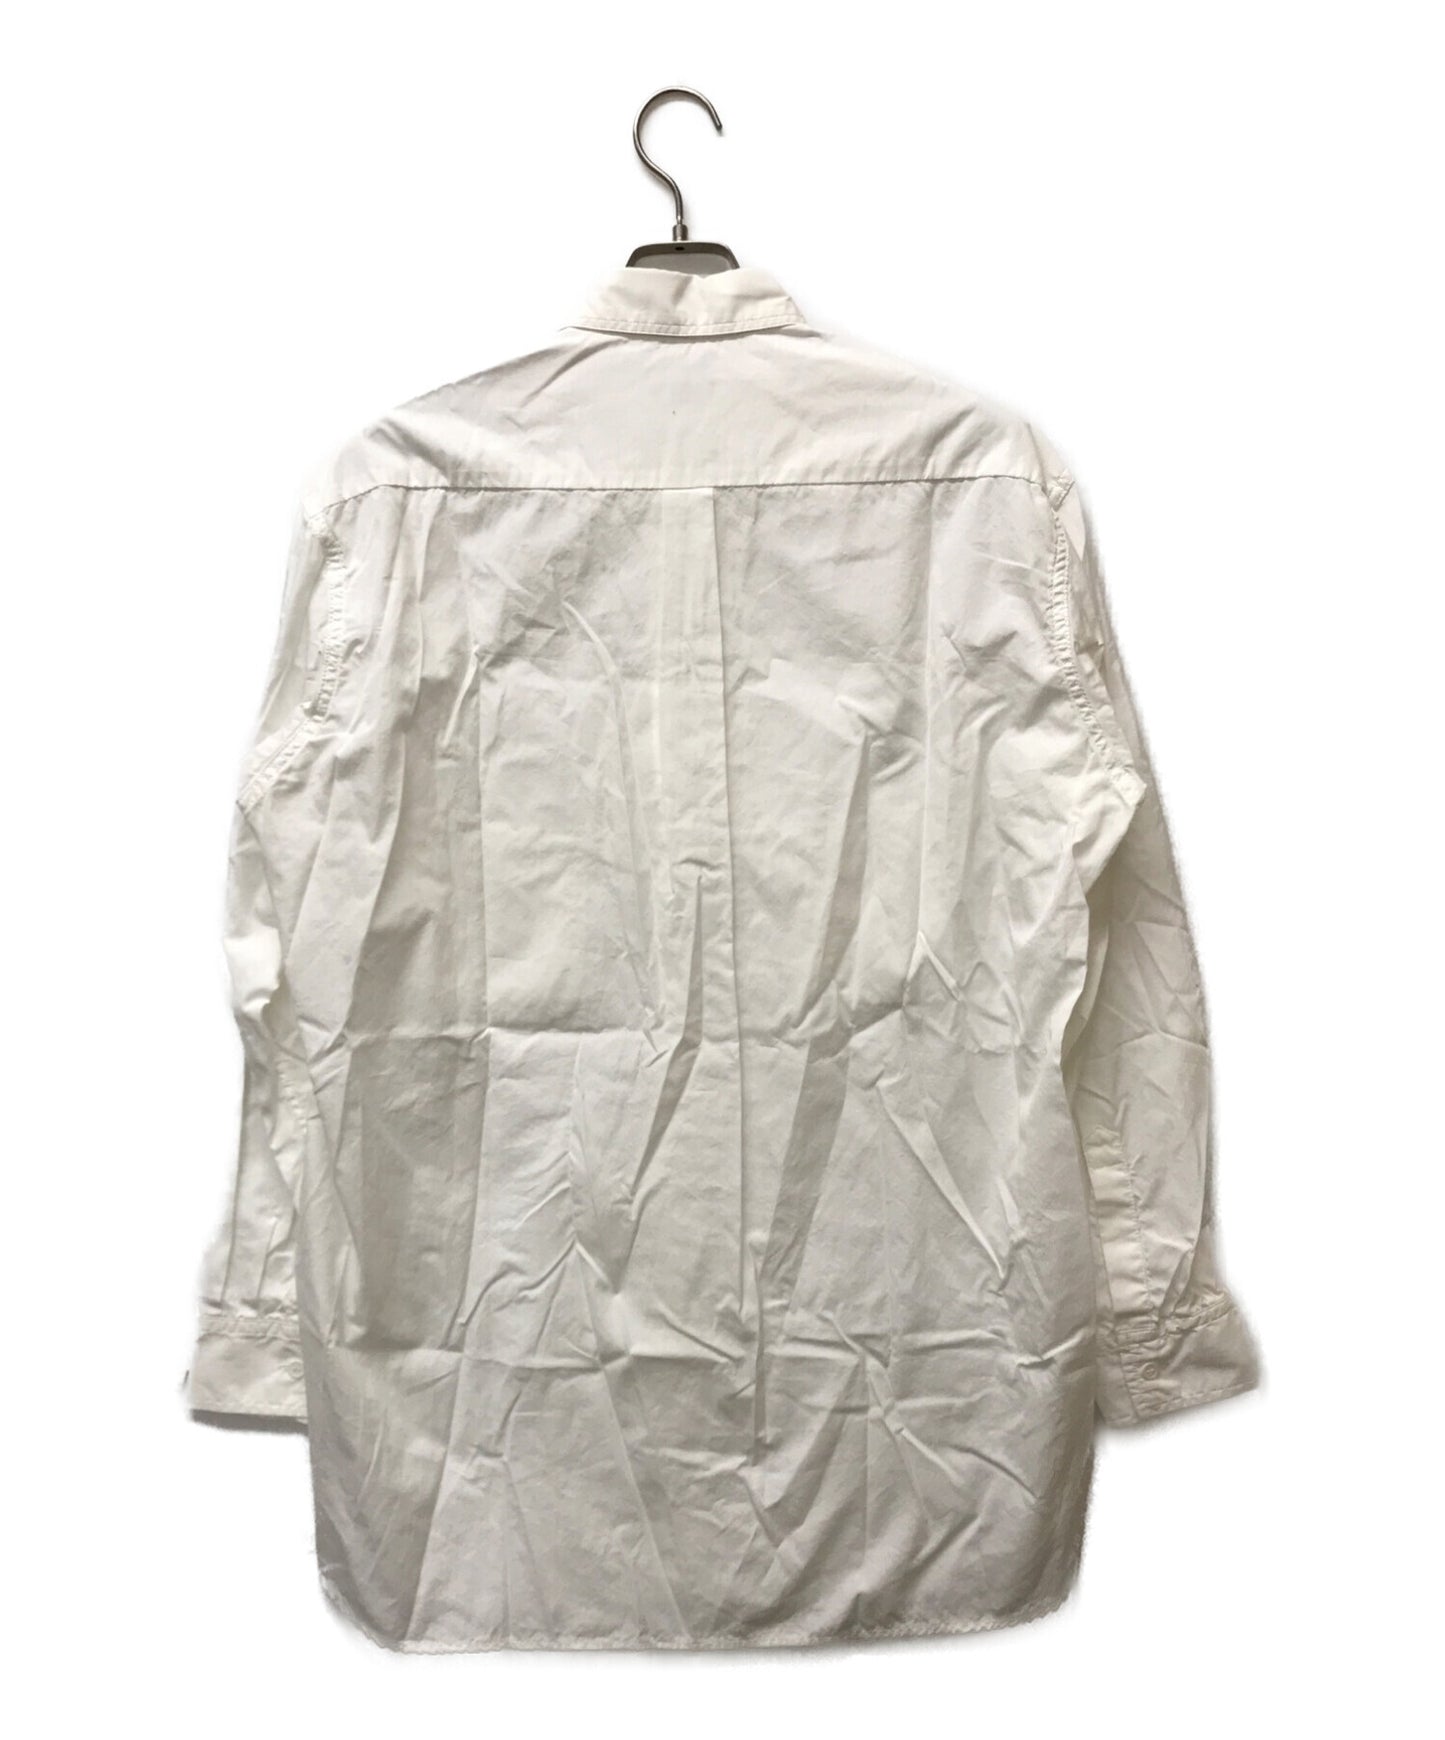 yohji yamamoto pour homme ring stitched broadcloth 일반 칼라 긴 셔츠 hw-b01-001